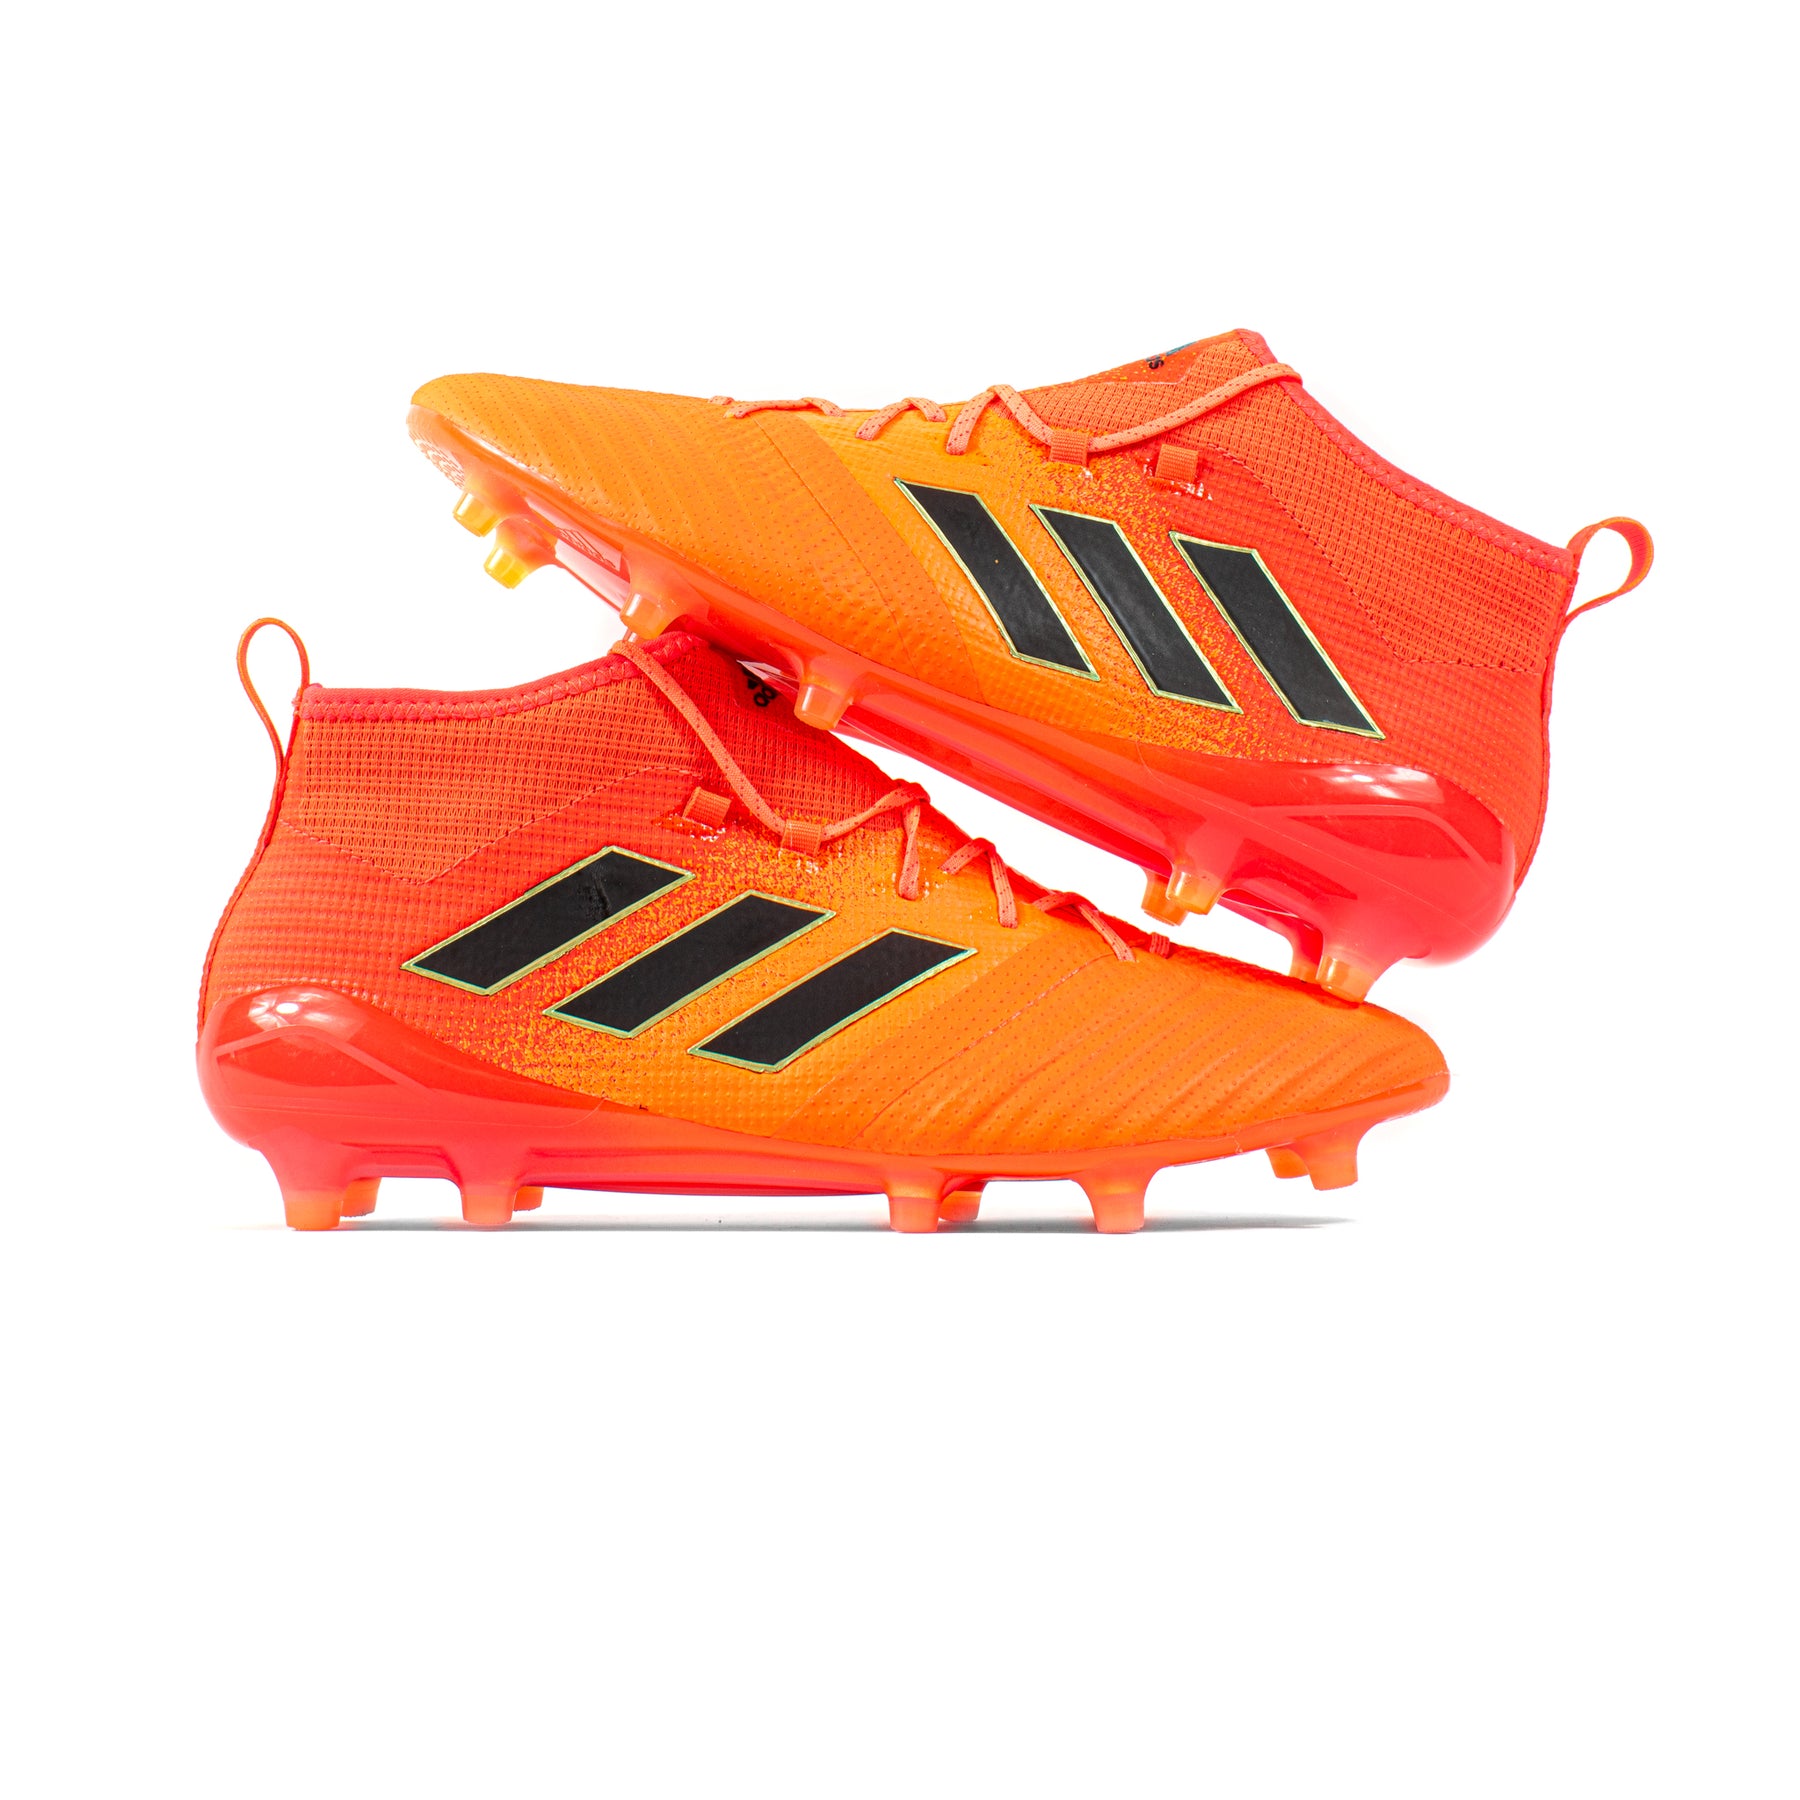 Adidas Ace Orange FG – Classic Soccer